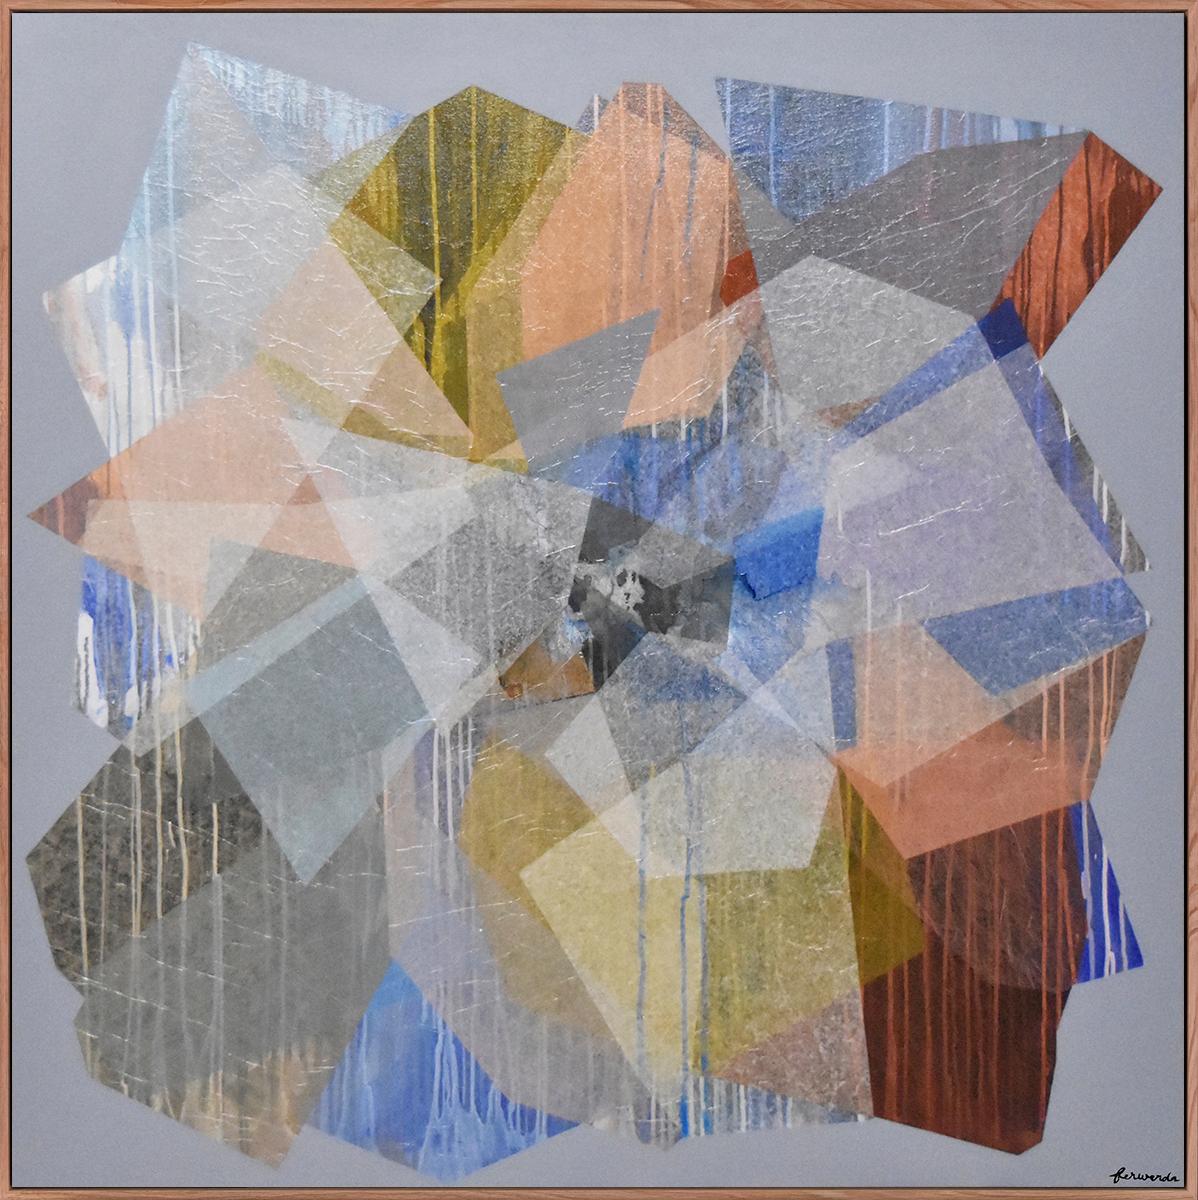 Copper Quasar-original geometrical modern abstract painting-contemporary Art